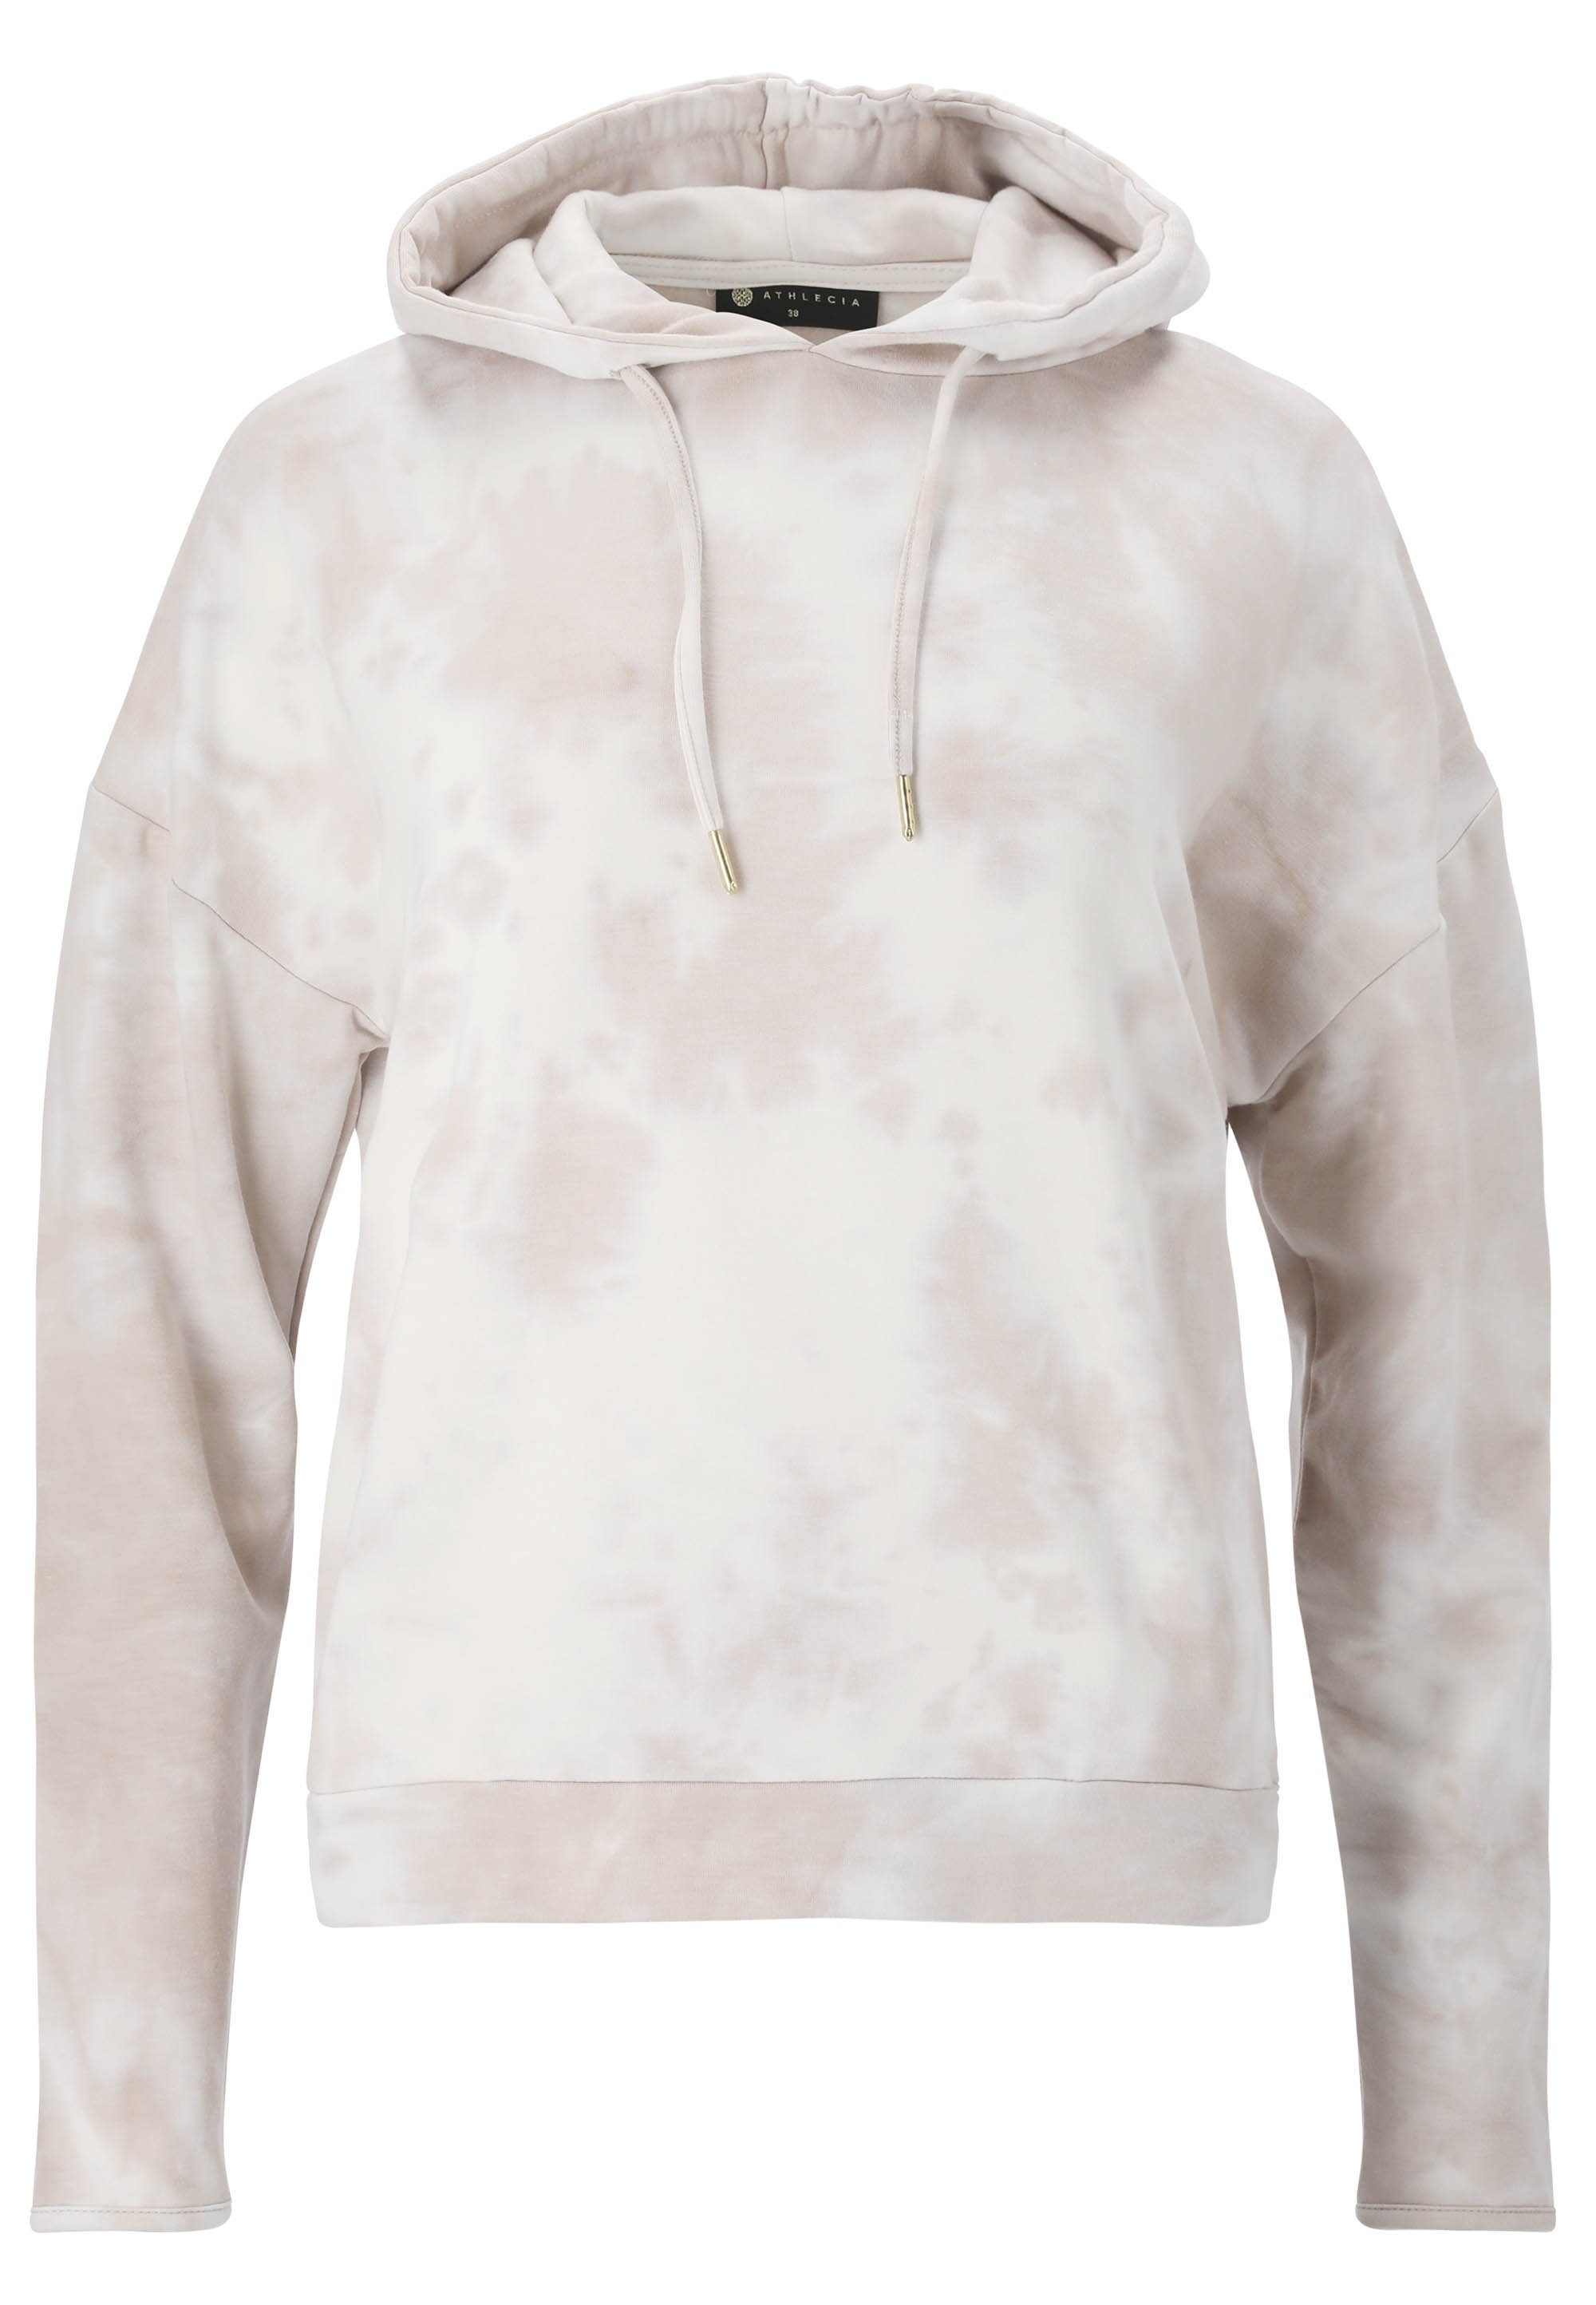 ATHLECIA Sweatshirt Reisalin mit tollem Marmor-Effekt